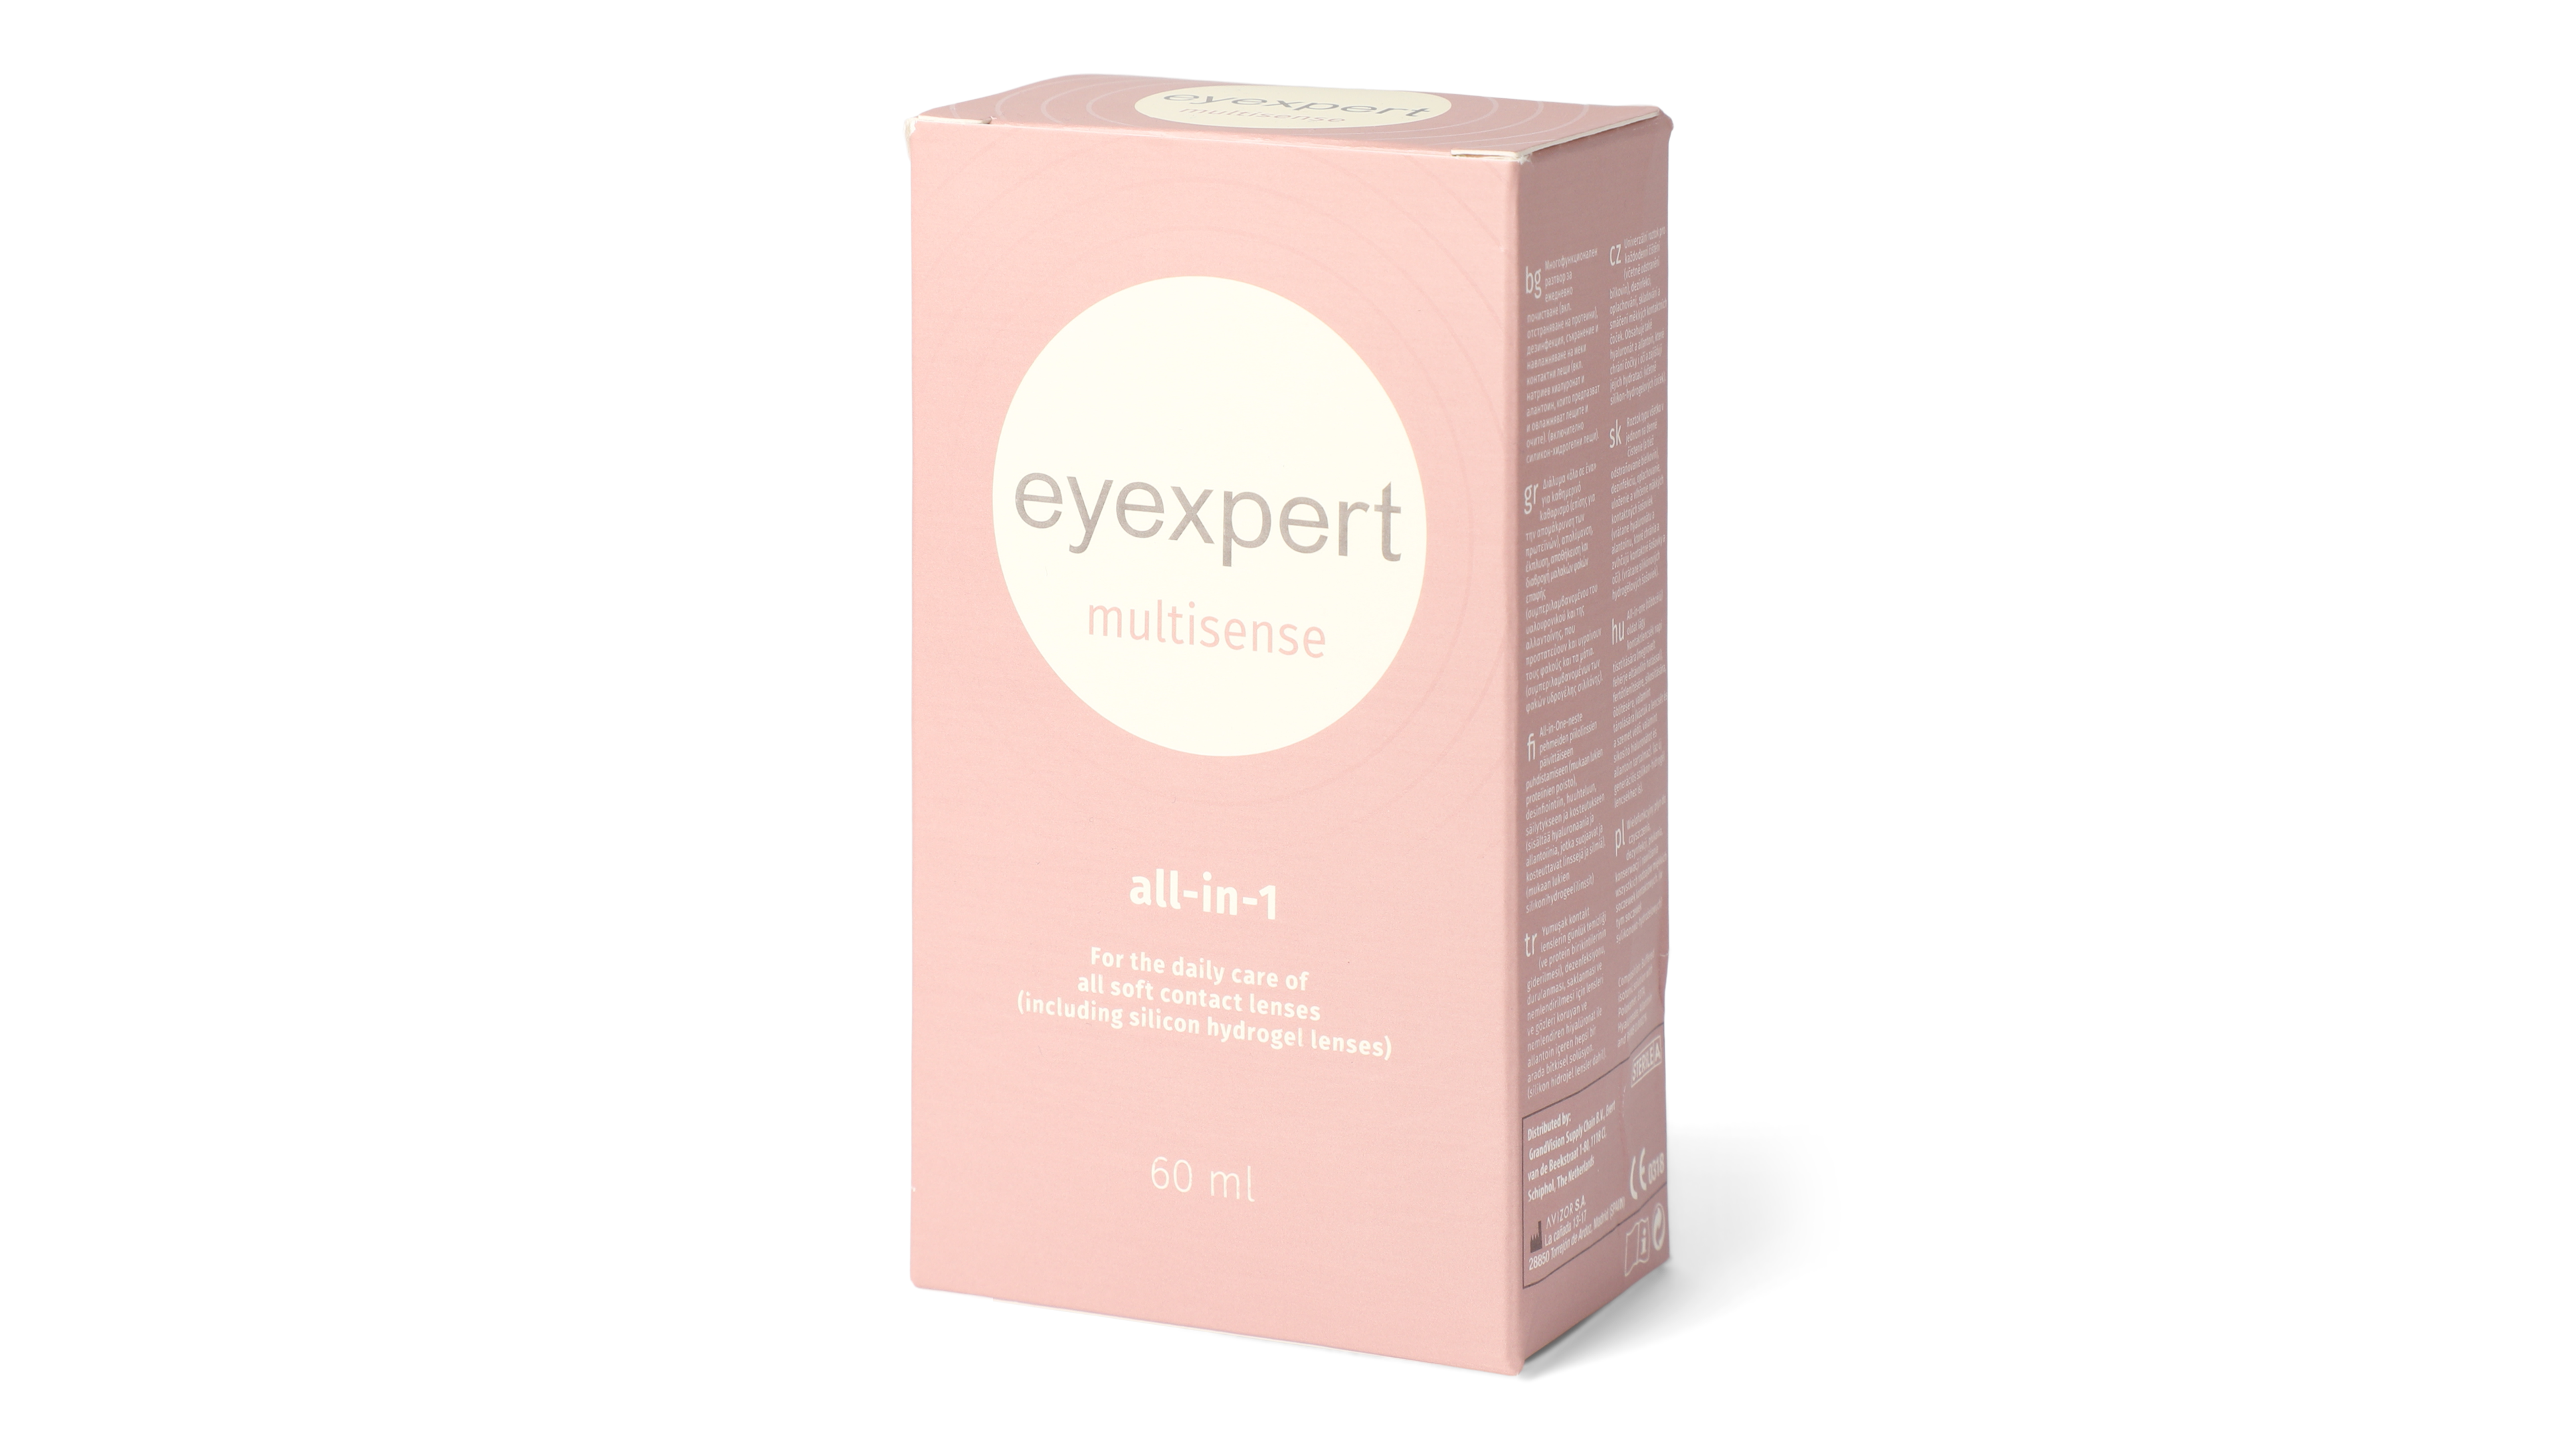 Angle_Left01 EYEXPERT Eyexpert multisense 60ml 60 ml